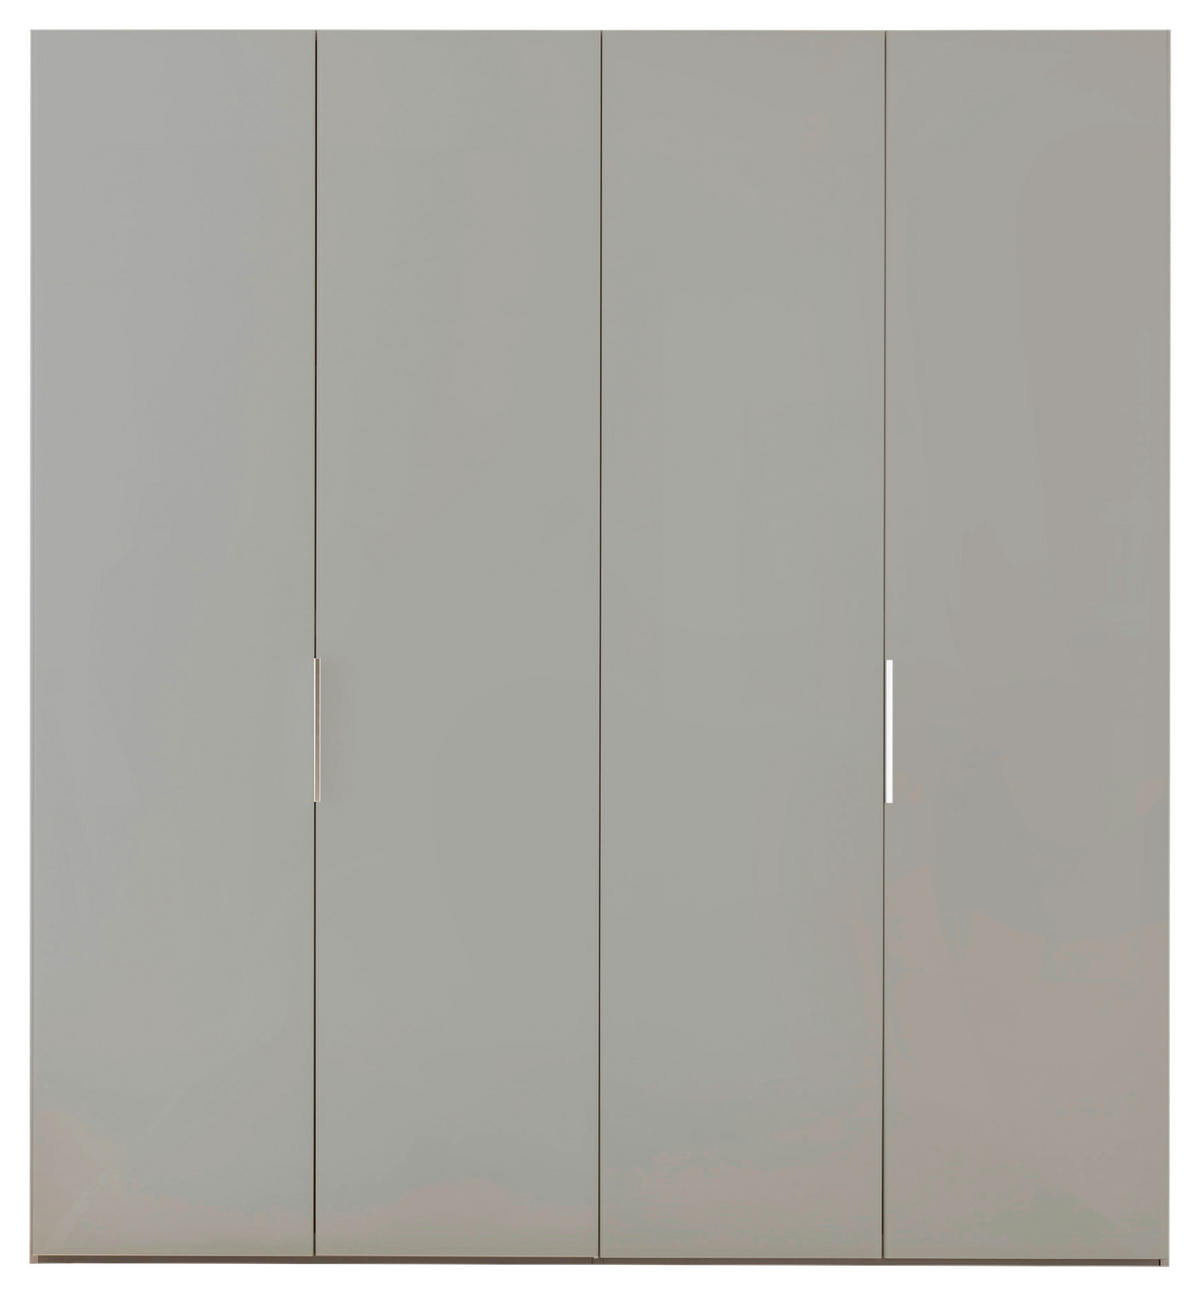 DREHTÜRENSCHRANK 200/216/58 cm 4-türig  - Alufarben/Grau, MODERN, Holzwerkstoff/Metall (200/216/58cm) - MID.YOU